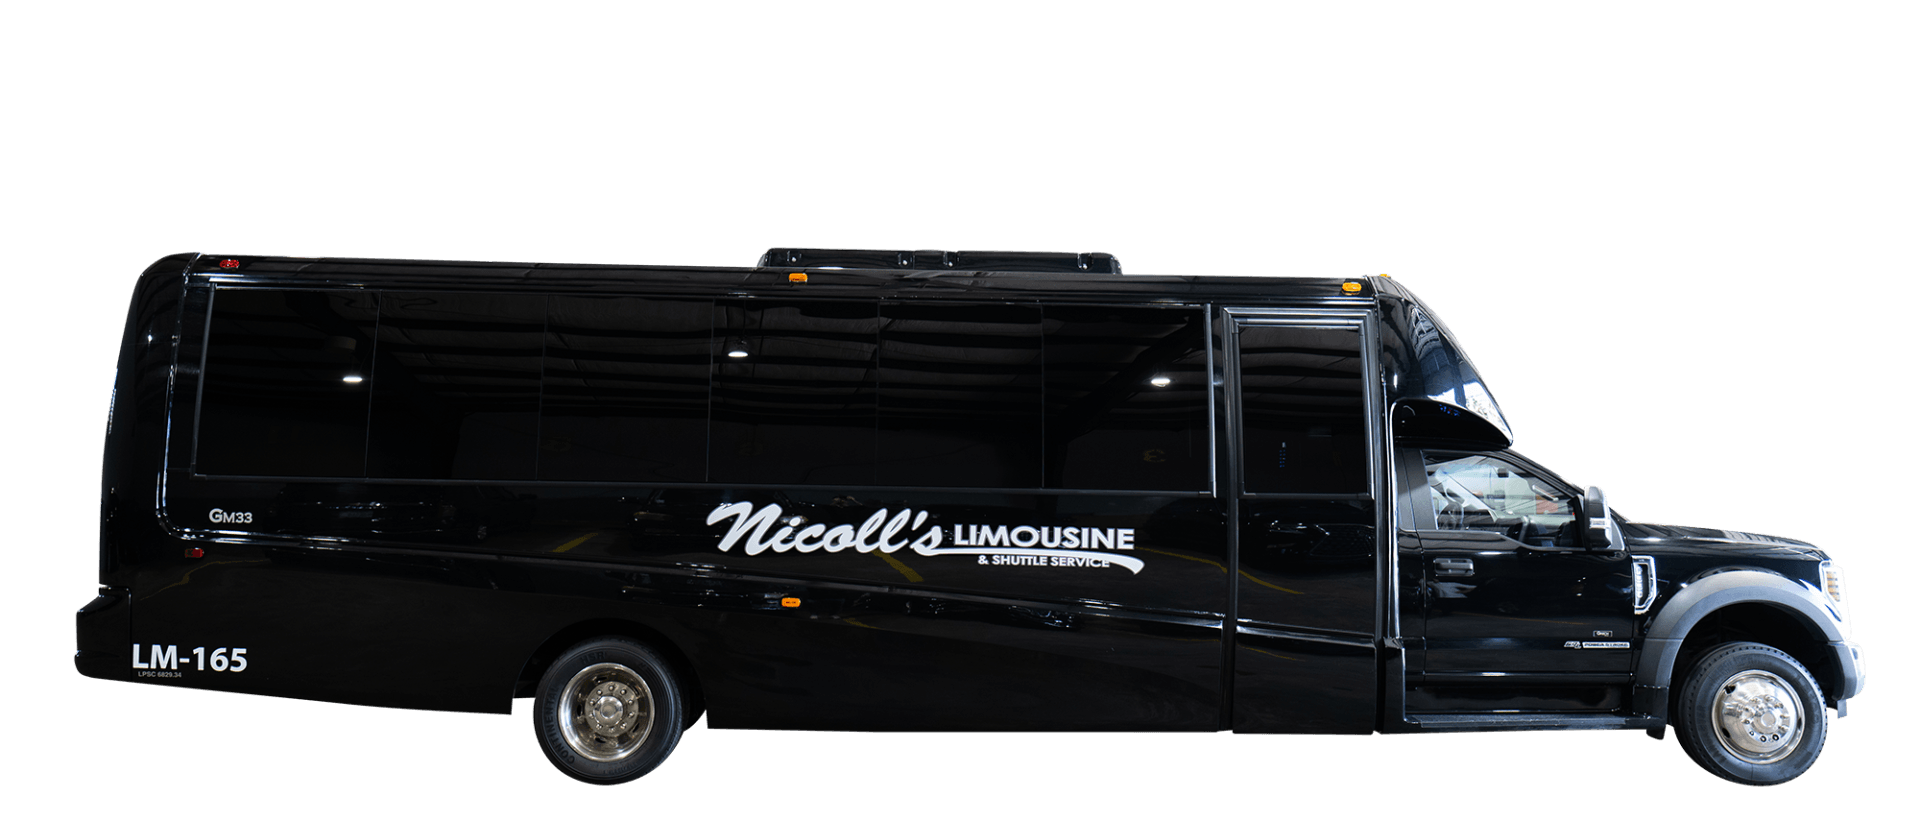 Nicoll's Limousine & Shuttle Service black shuttle vehicle - LM-165